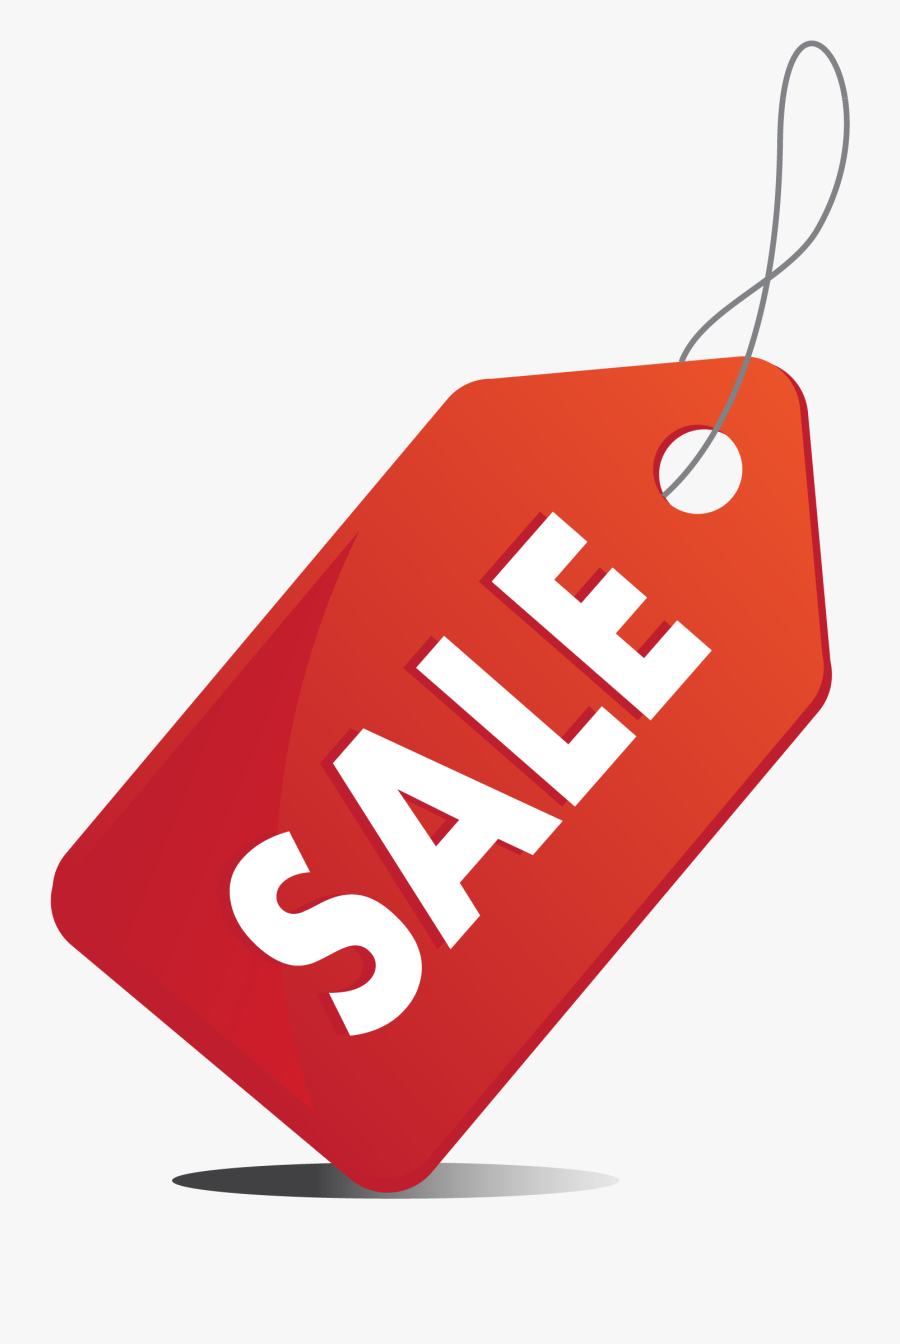 Sale Tag Vector Clipart , Png Download - Sale Tag Clipart, Transparent Clipart